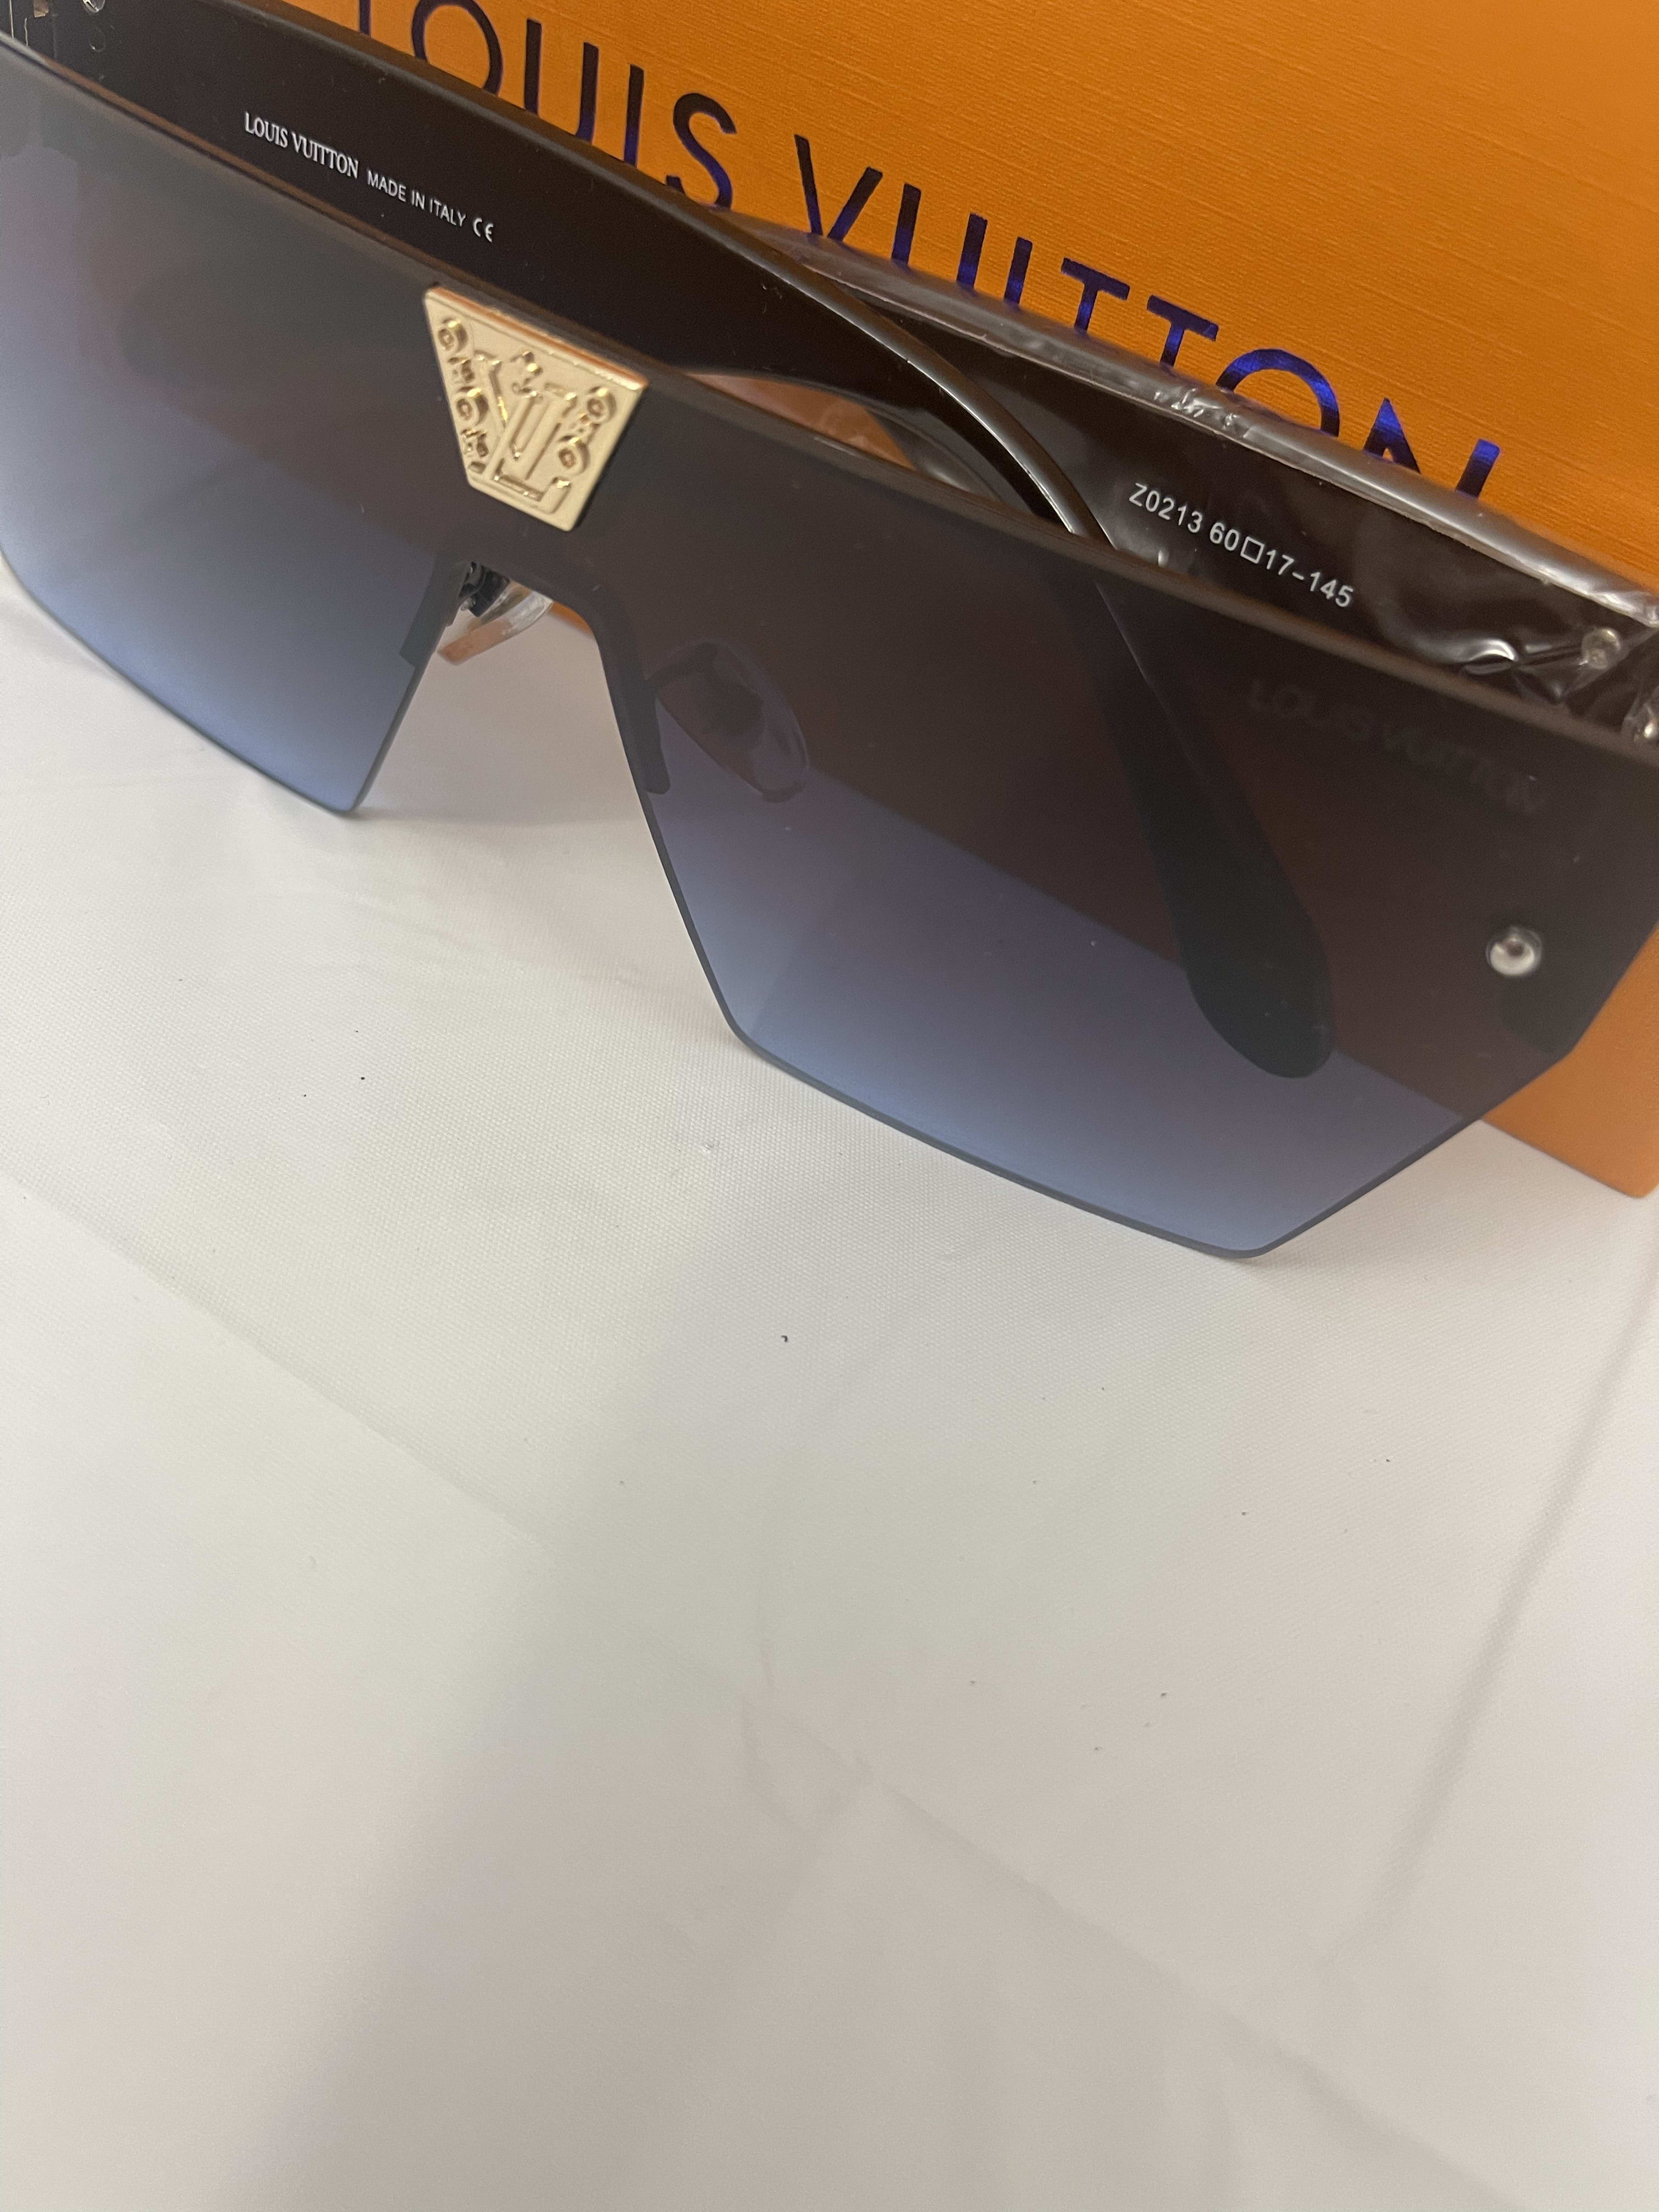 Louis Vuitton Sunglasses - Designer Sunglasses - Timeless Kicks